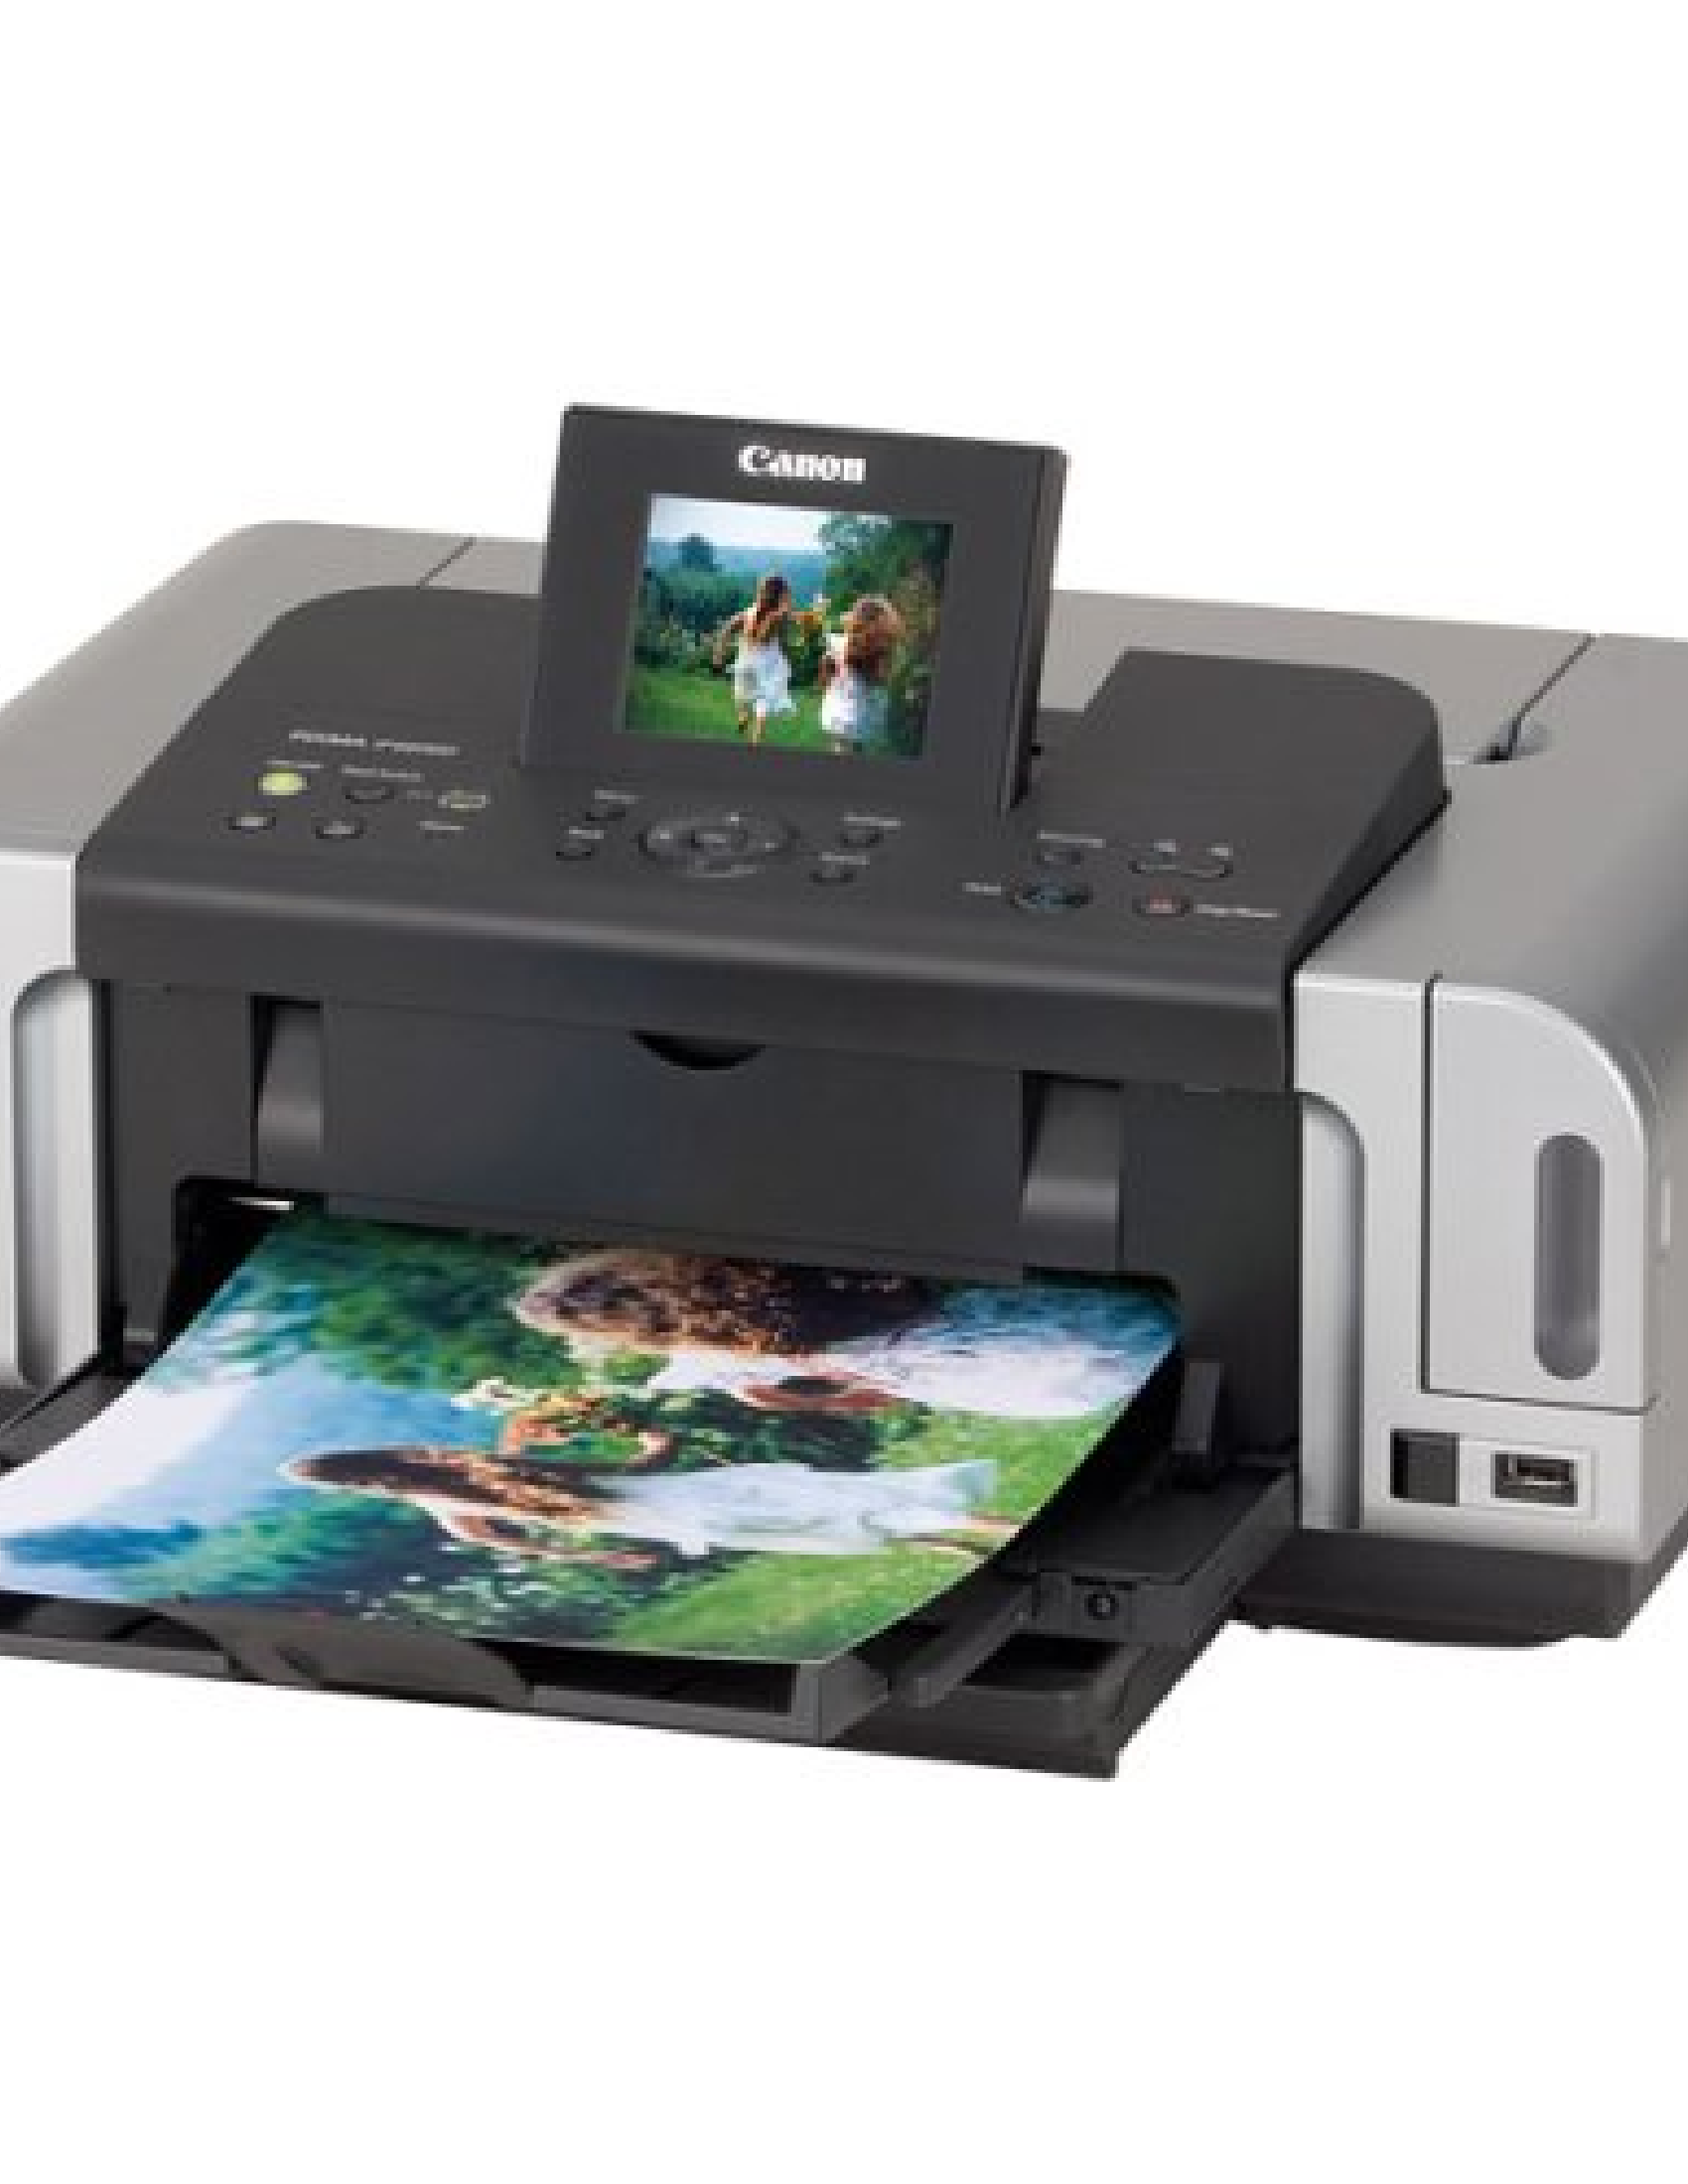 Canon iP6600D PIXMA Printer manual